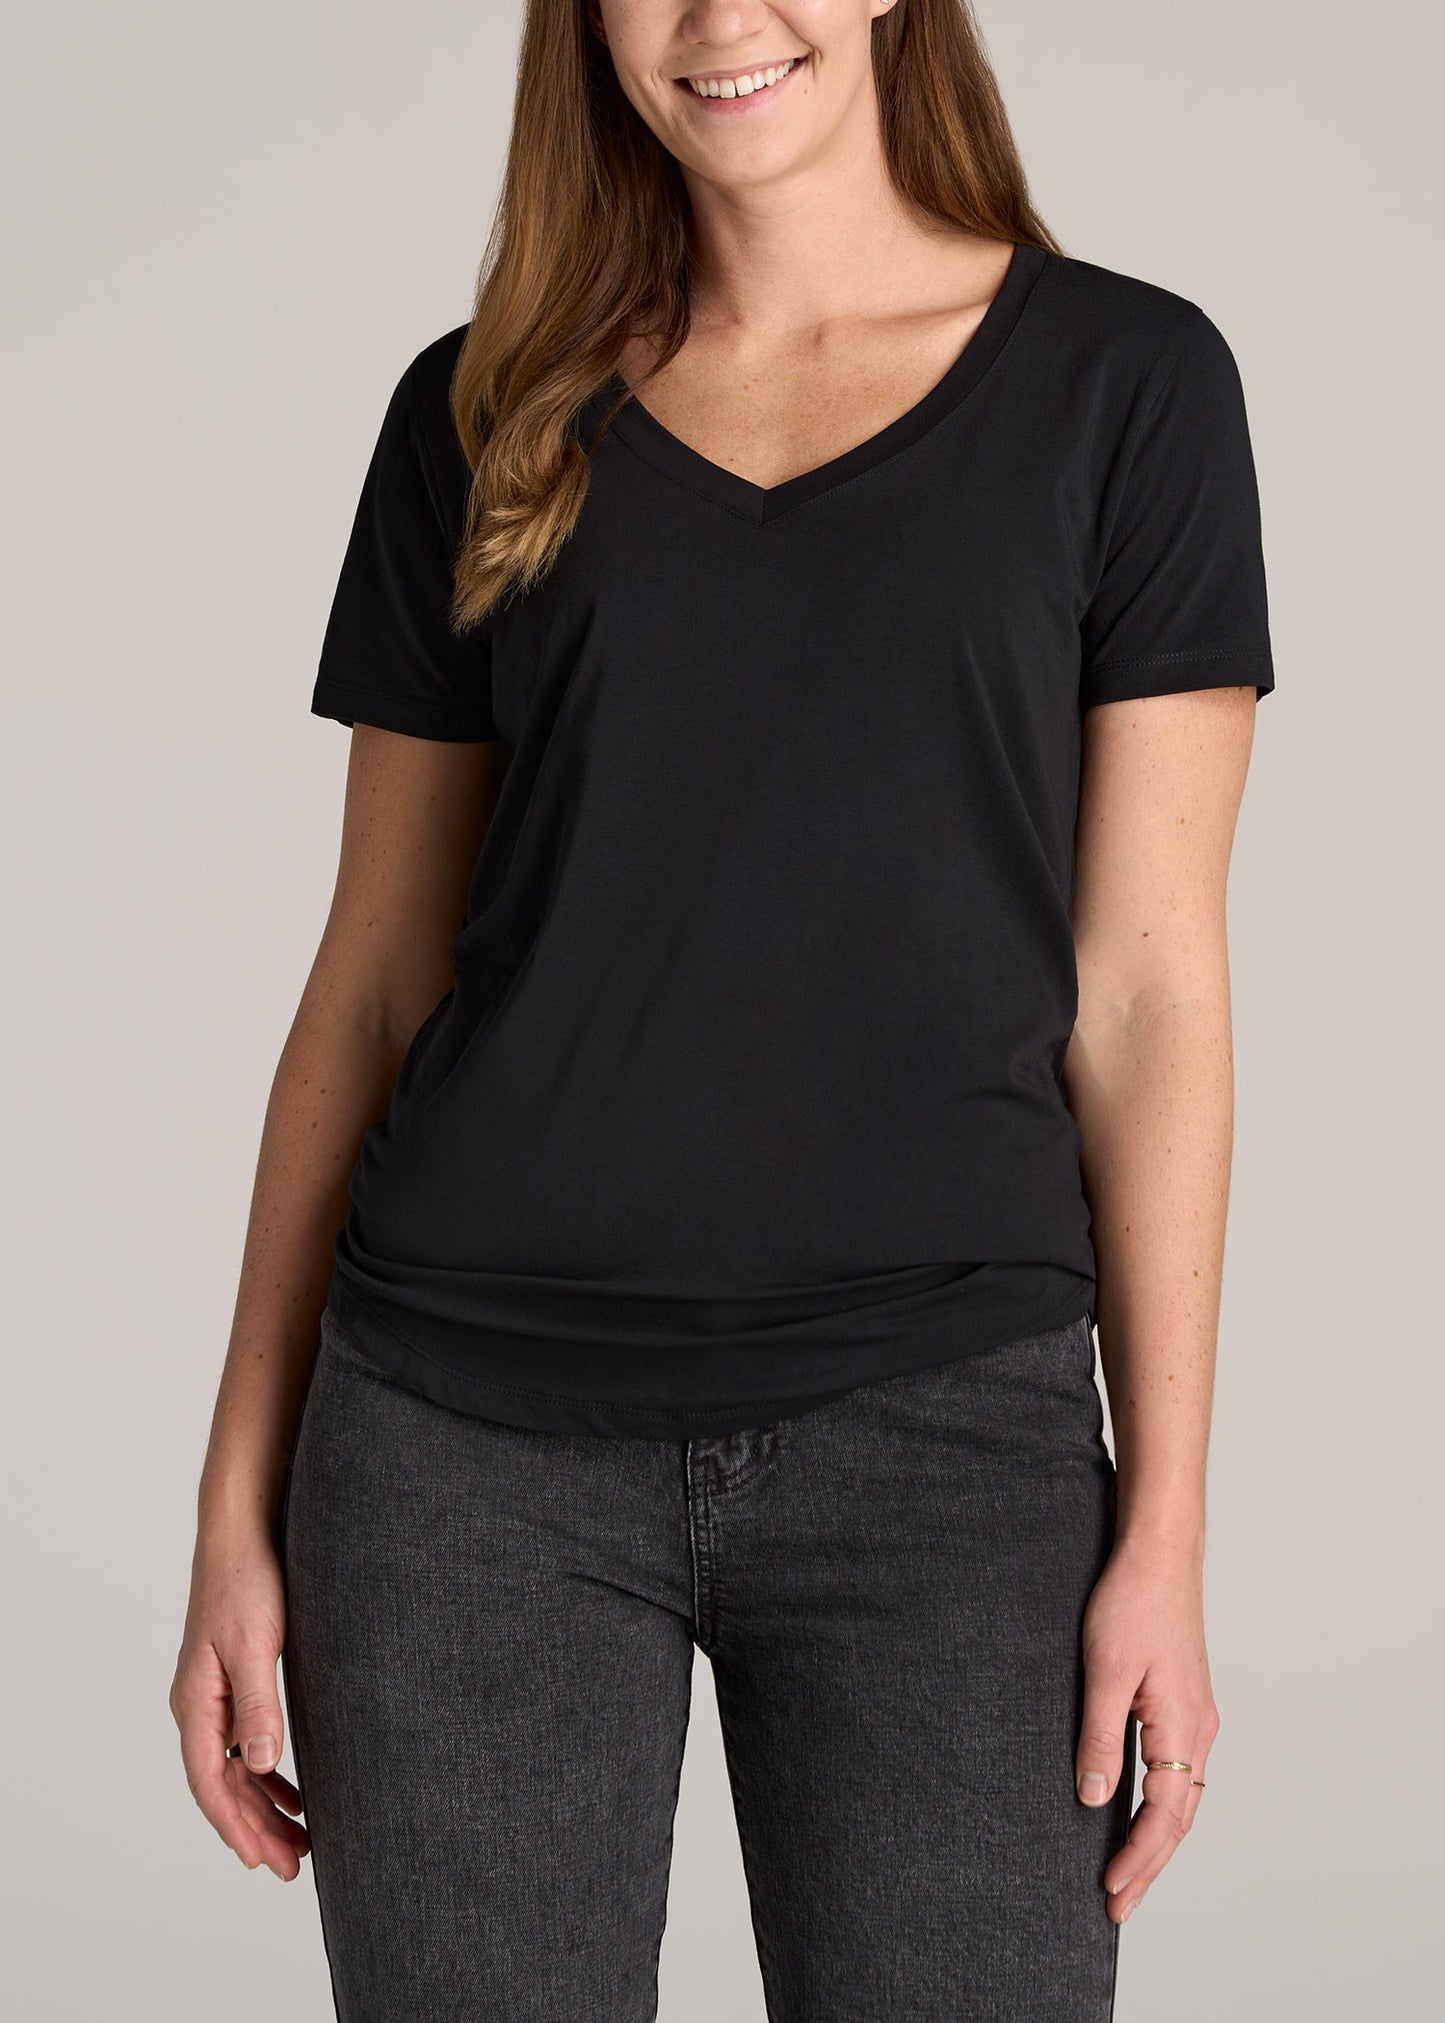 Women's Tall V-Neck Tee Shirts: Black Scoop Neck Tee | American Tall